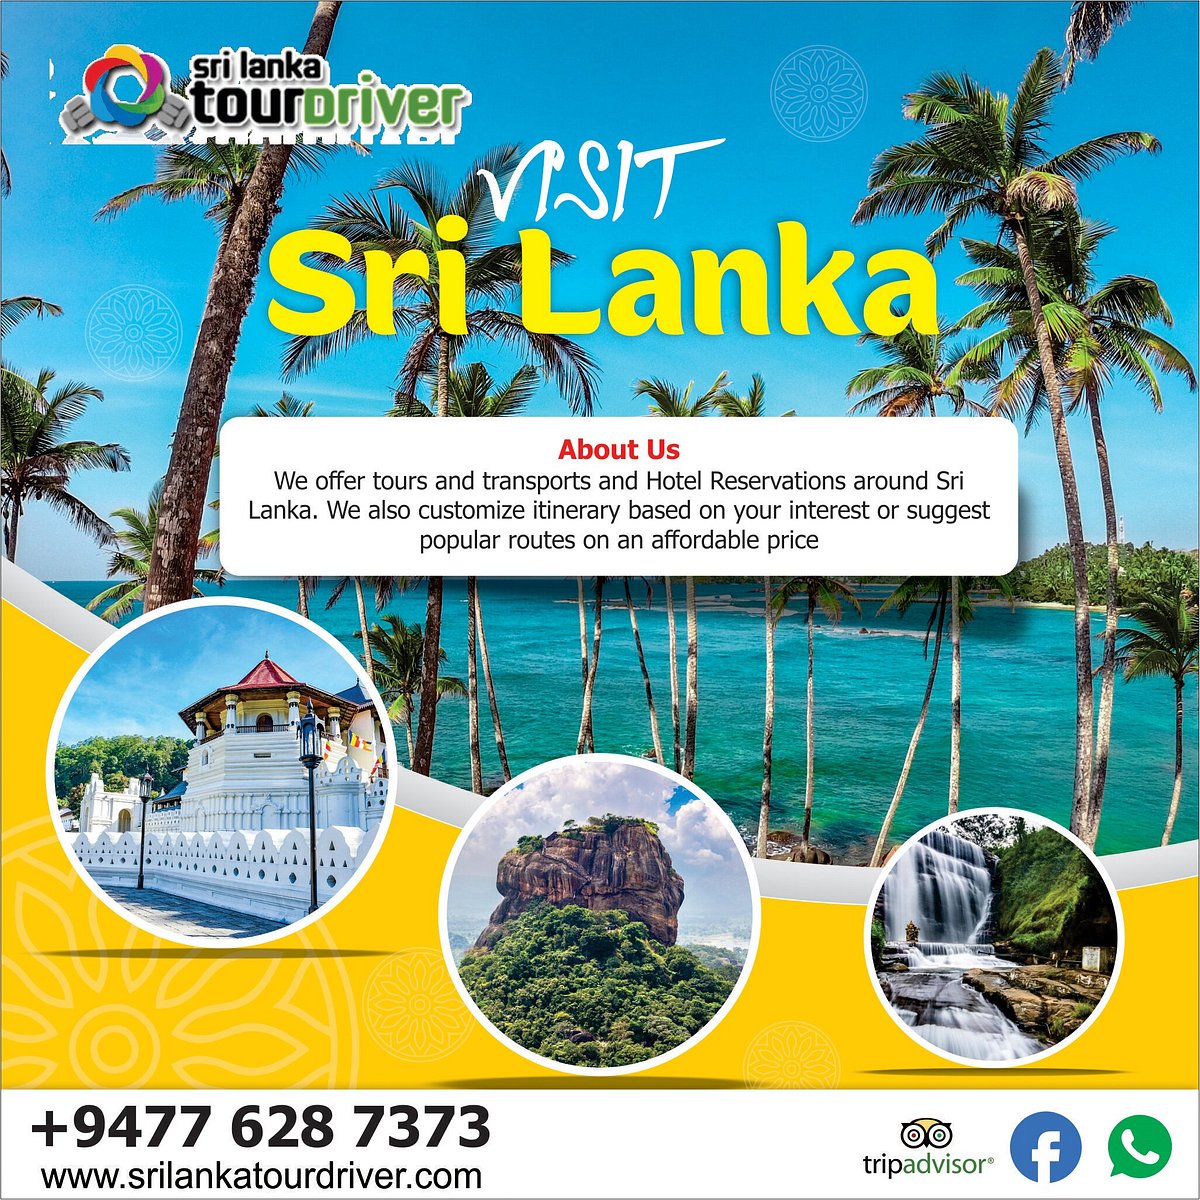 sri lanka tour package with flight